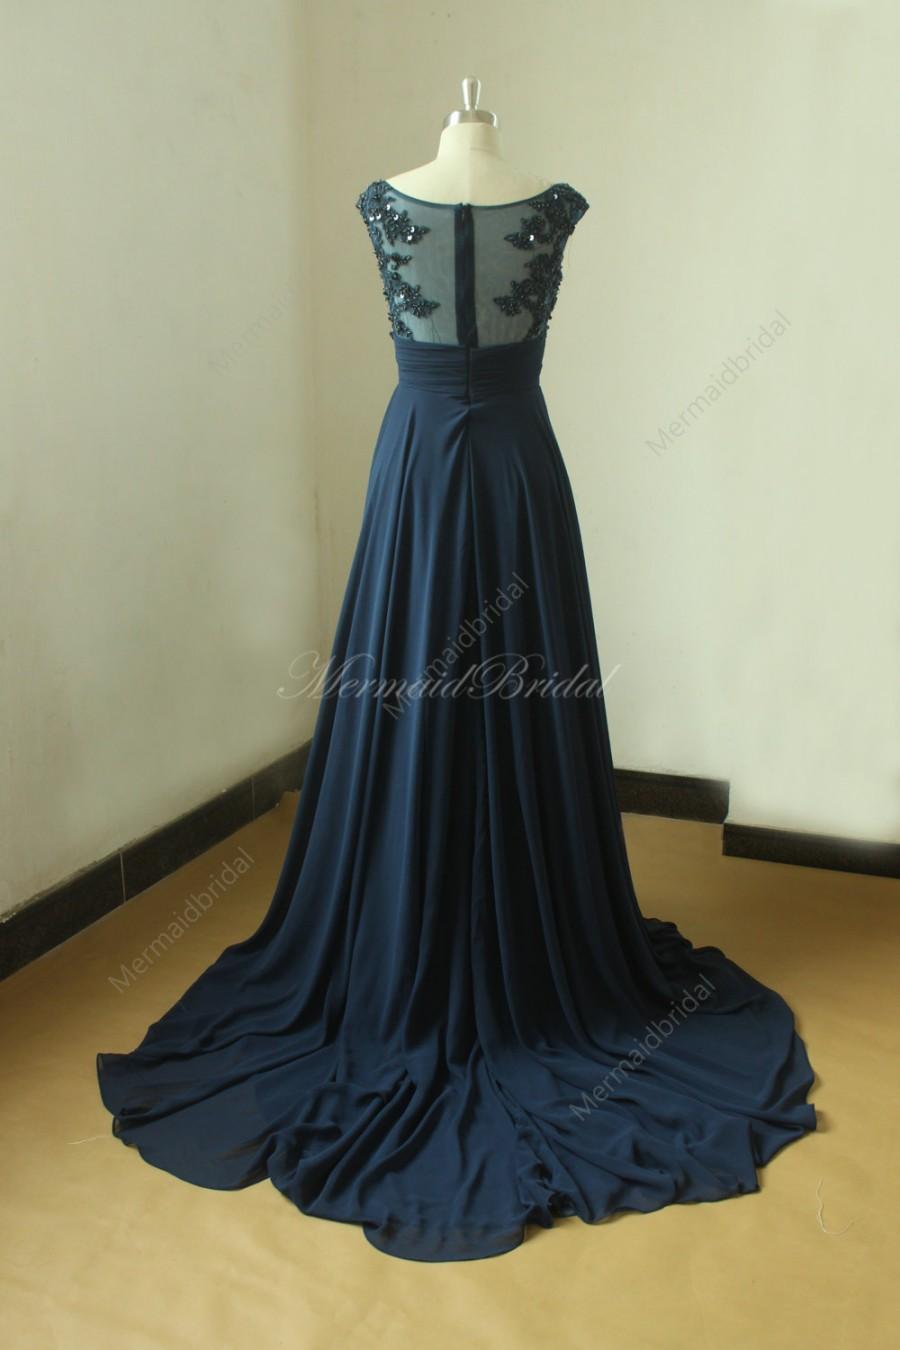 زفاف - Backless Navy blue A line chiffon lace wedding dress with illusion neckline